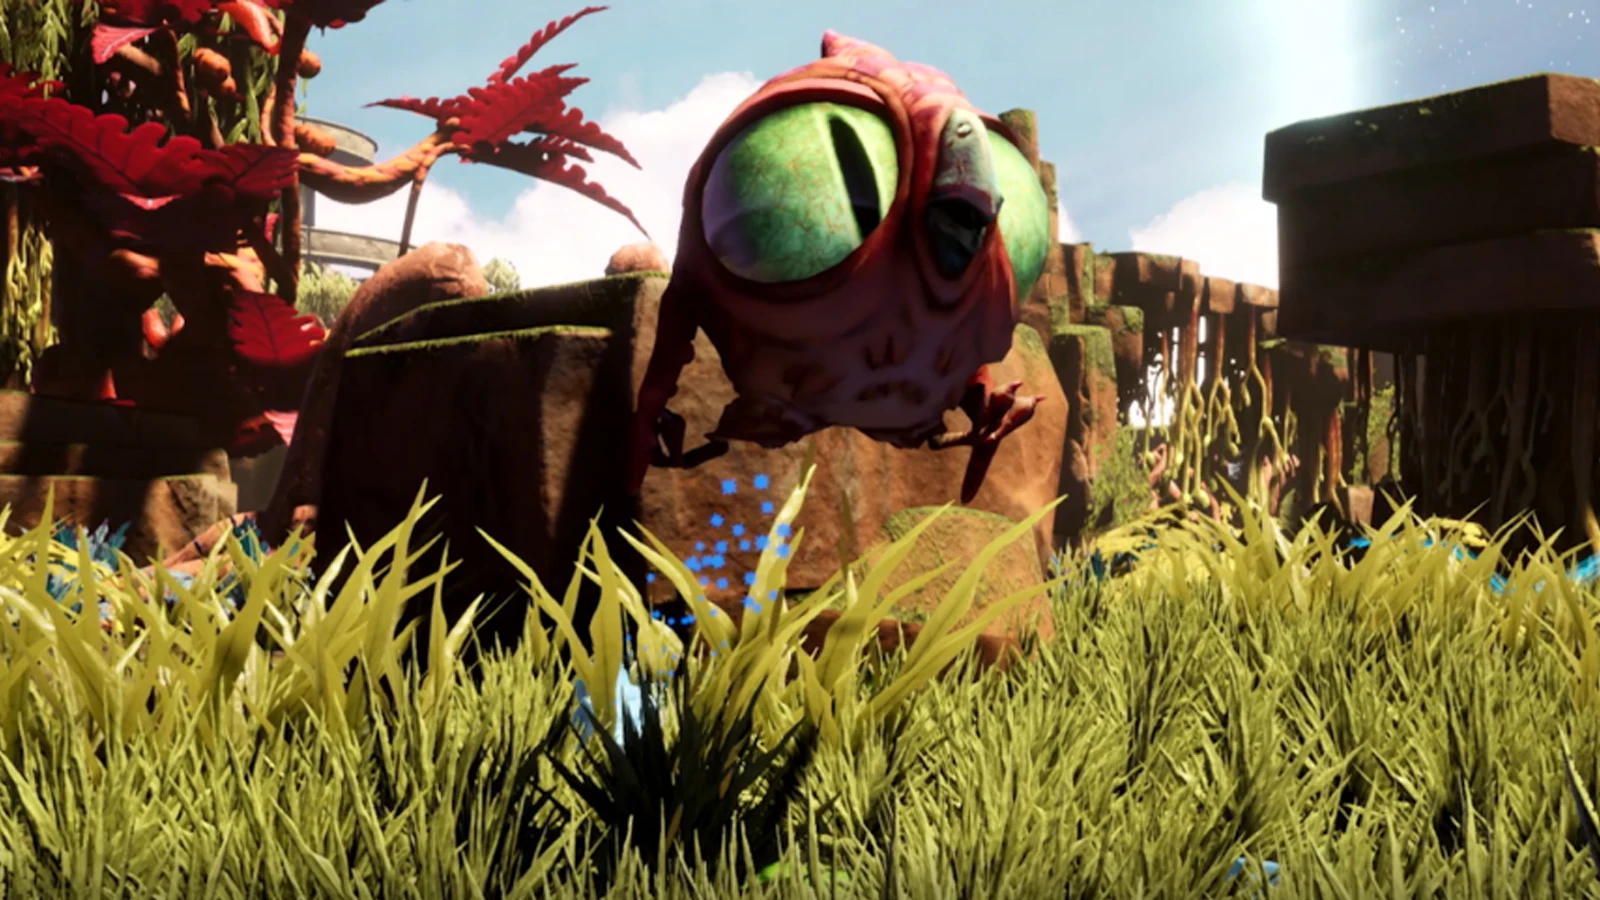 《Journey to the Savage Planet》公布全新游戏试玩预告片，展现幽默外星旅程